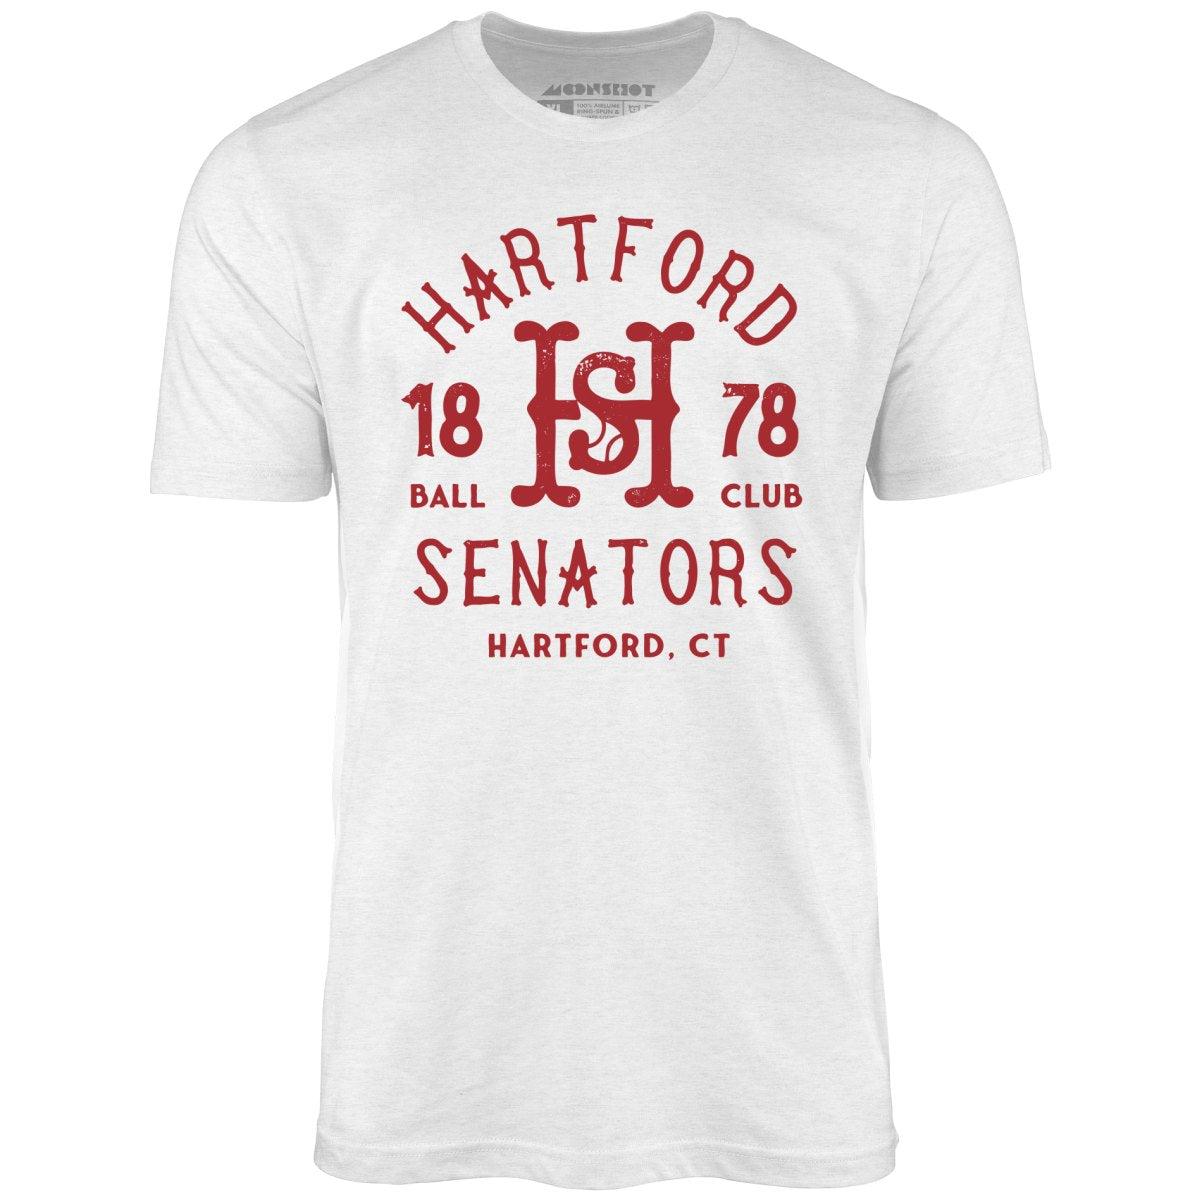 Hartford Senators - Connecticut - Vintage Defunct Baseball Teams - Unisex T-Shirt